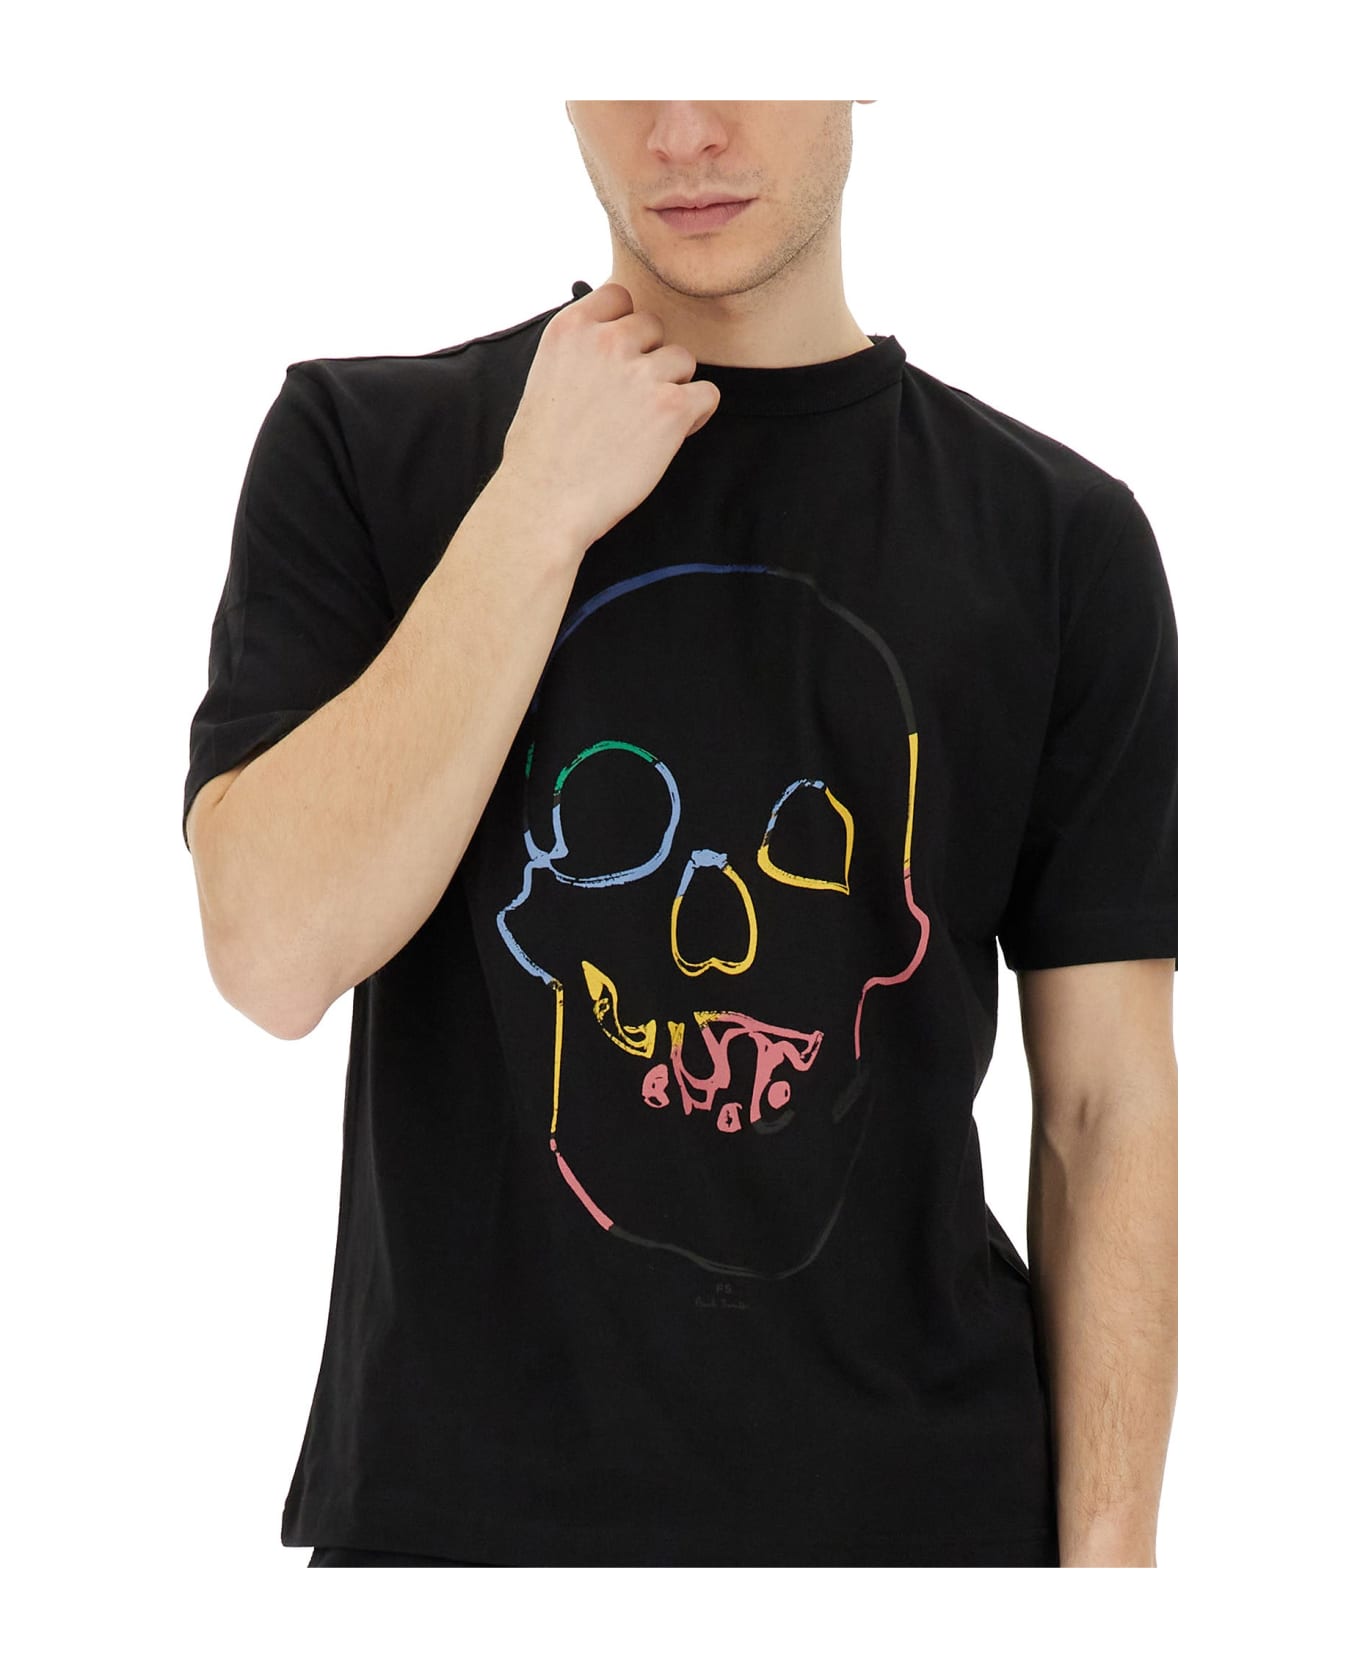 Paul Smith Skull T-shirt - Black シャツ